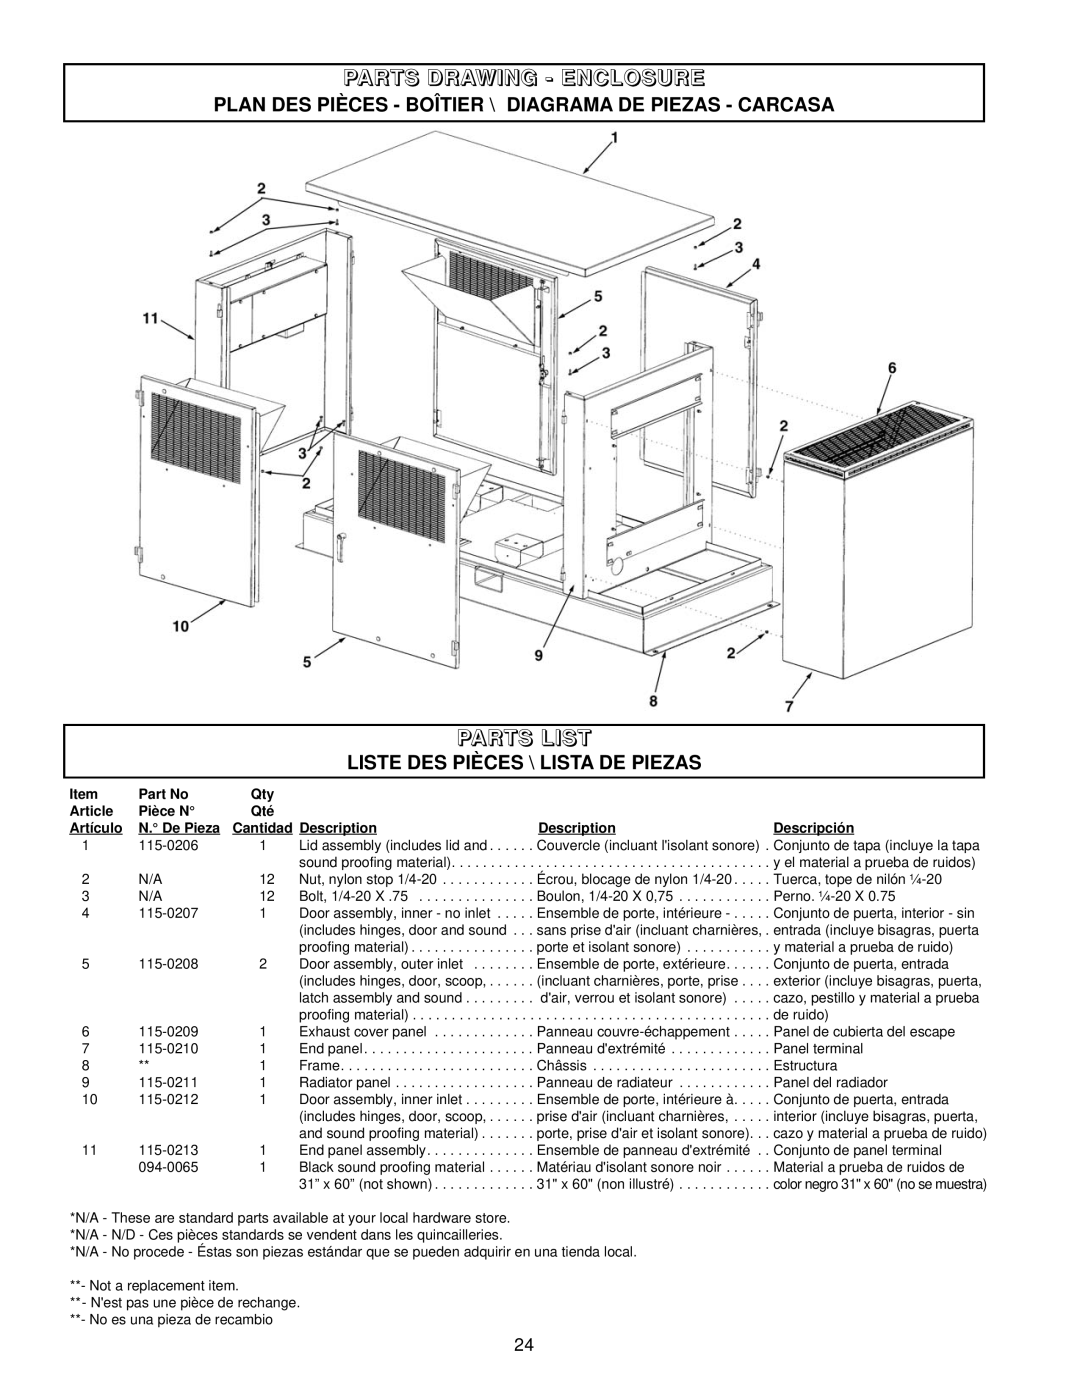 Coleman PM402511 Parts Drawing - Enclosure, Parts List, Plan Des Pièces - Boîtier \ Diagrama De Piezas - Carcasa, Article 